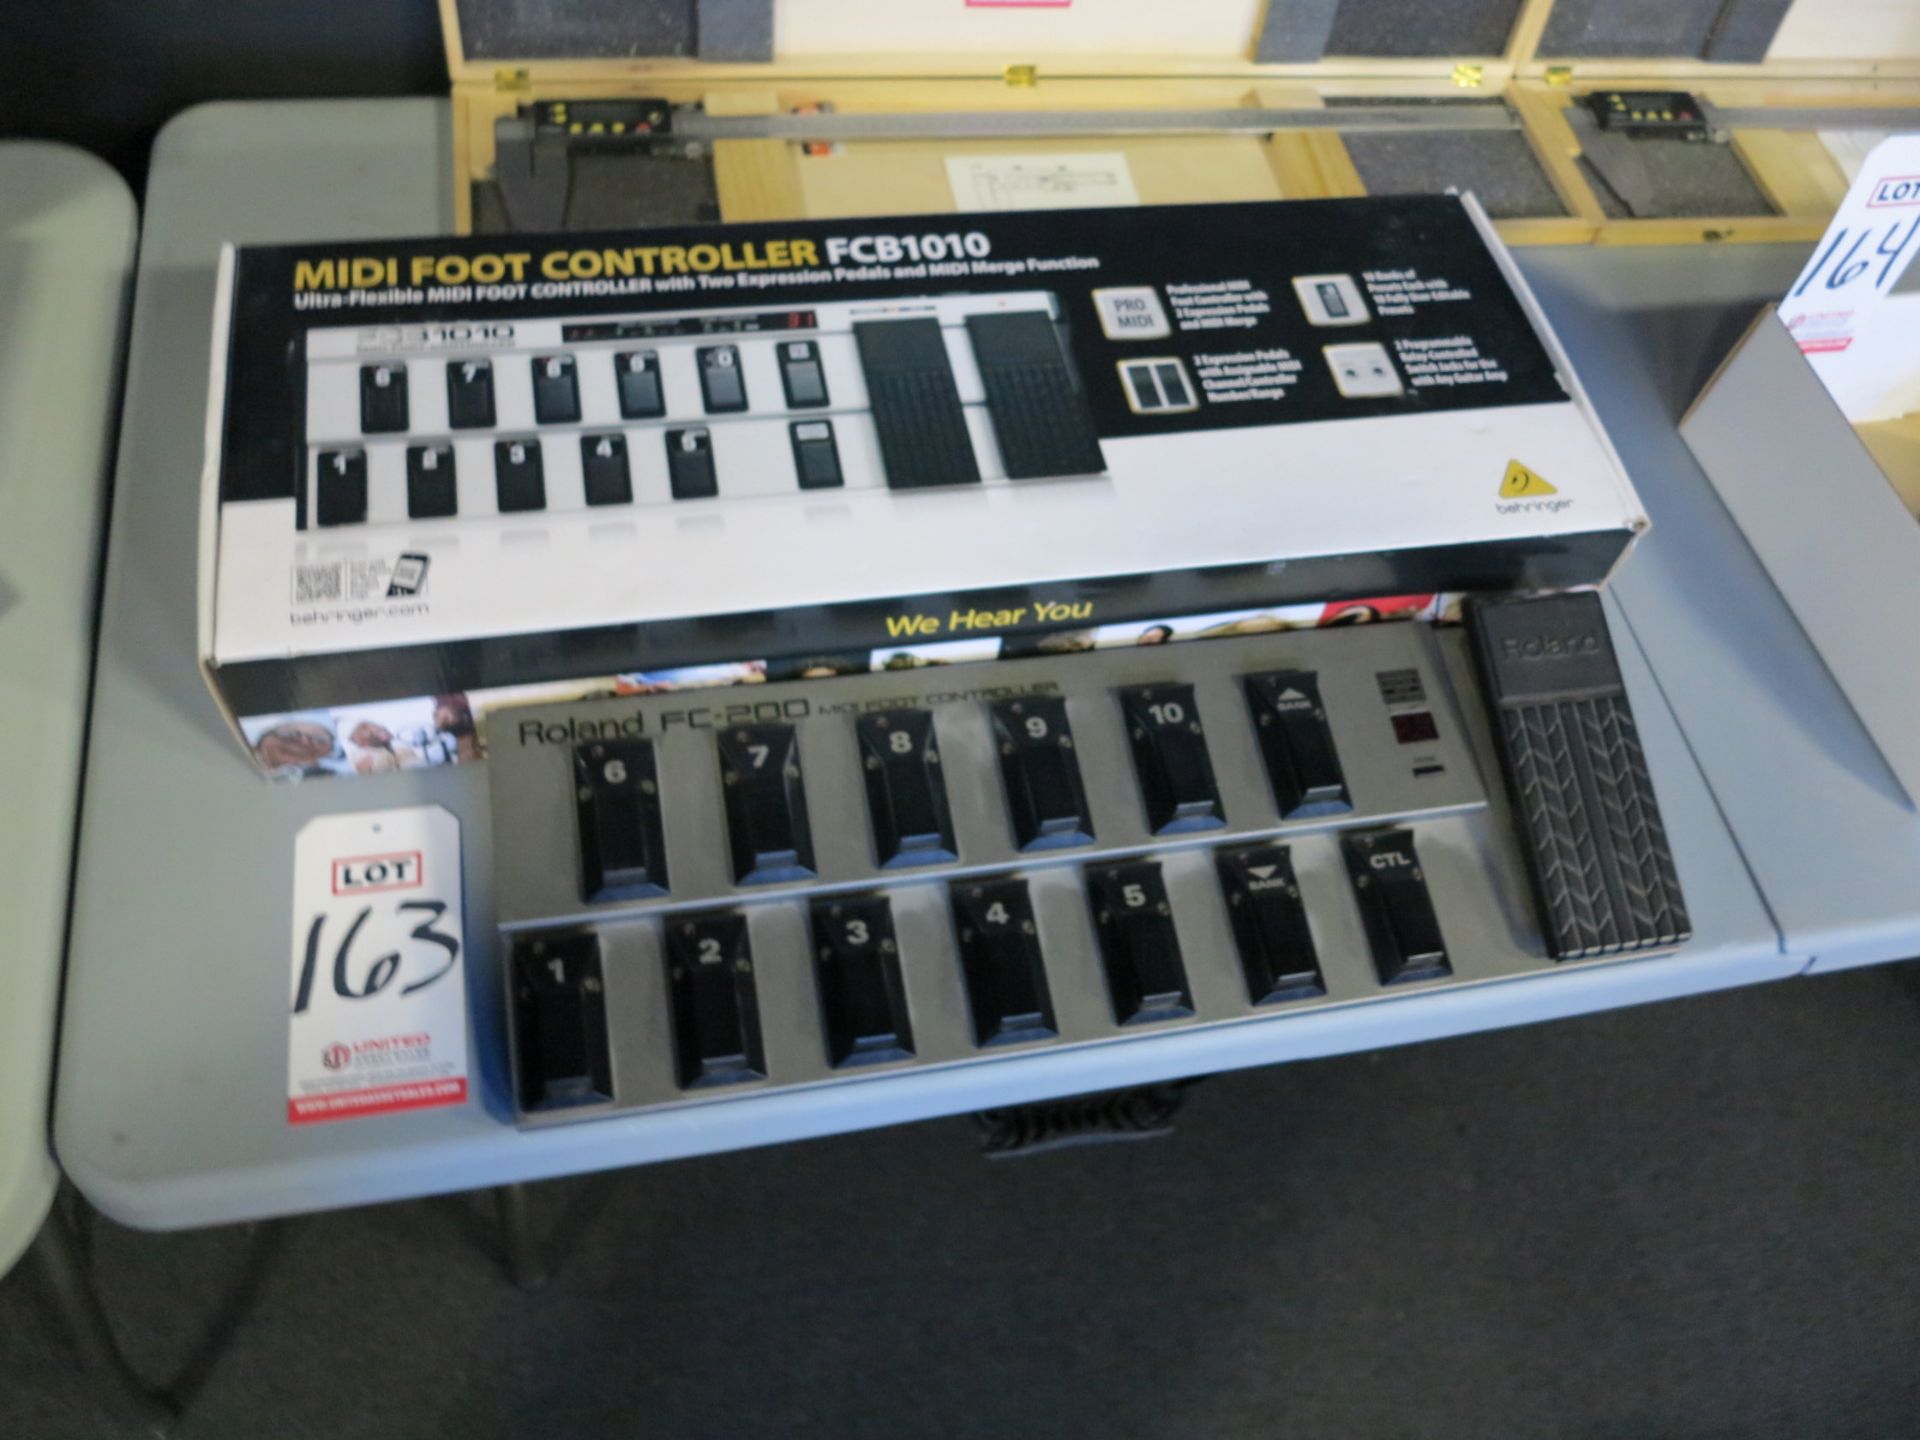 BEHRINGER MIDI FOOT CONTROLLER, MODEL FCB1010 AND ROLAND FC-200 MIDI FOOT CONTROLLER